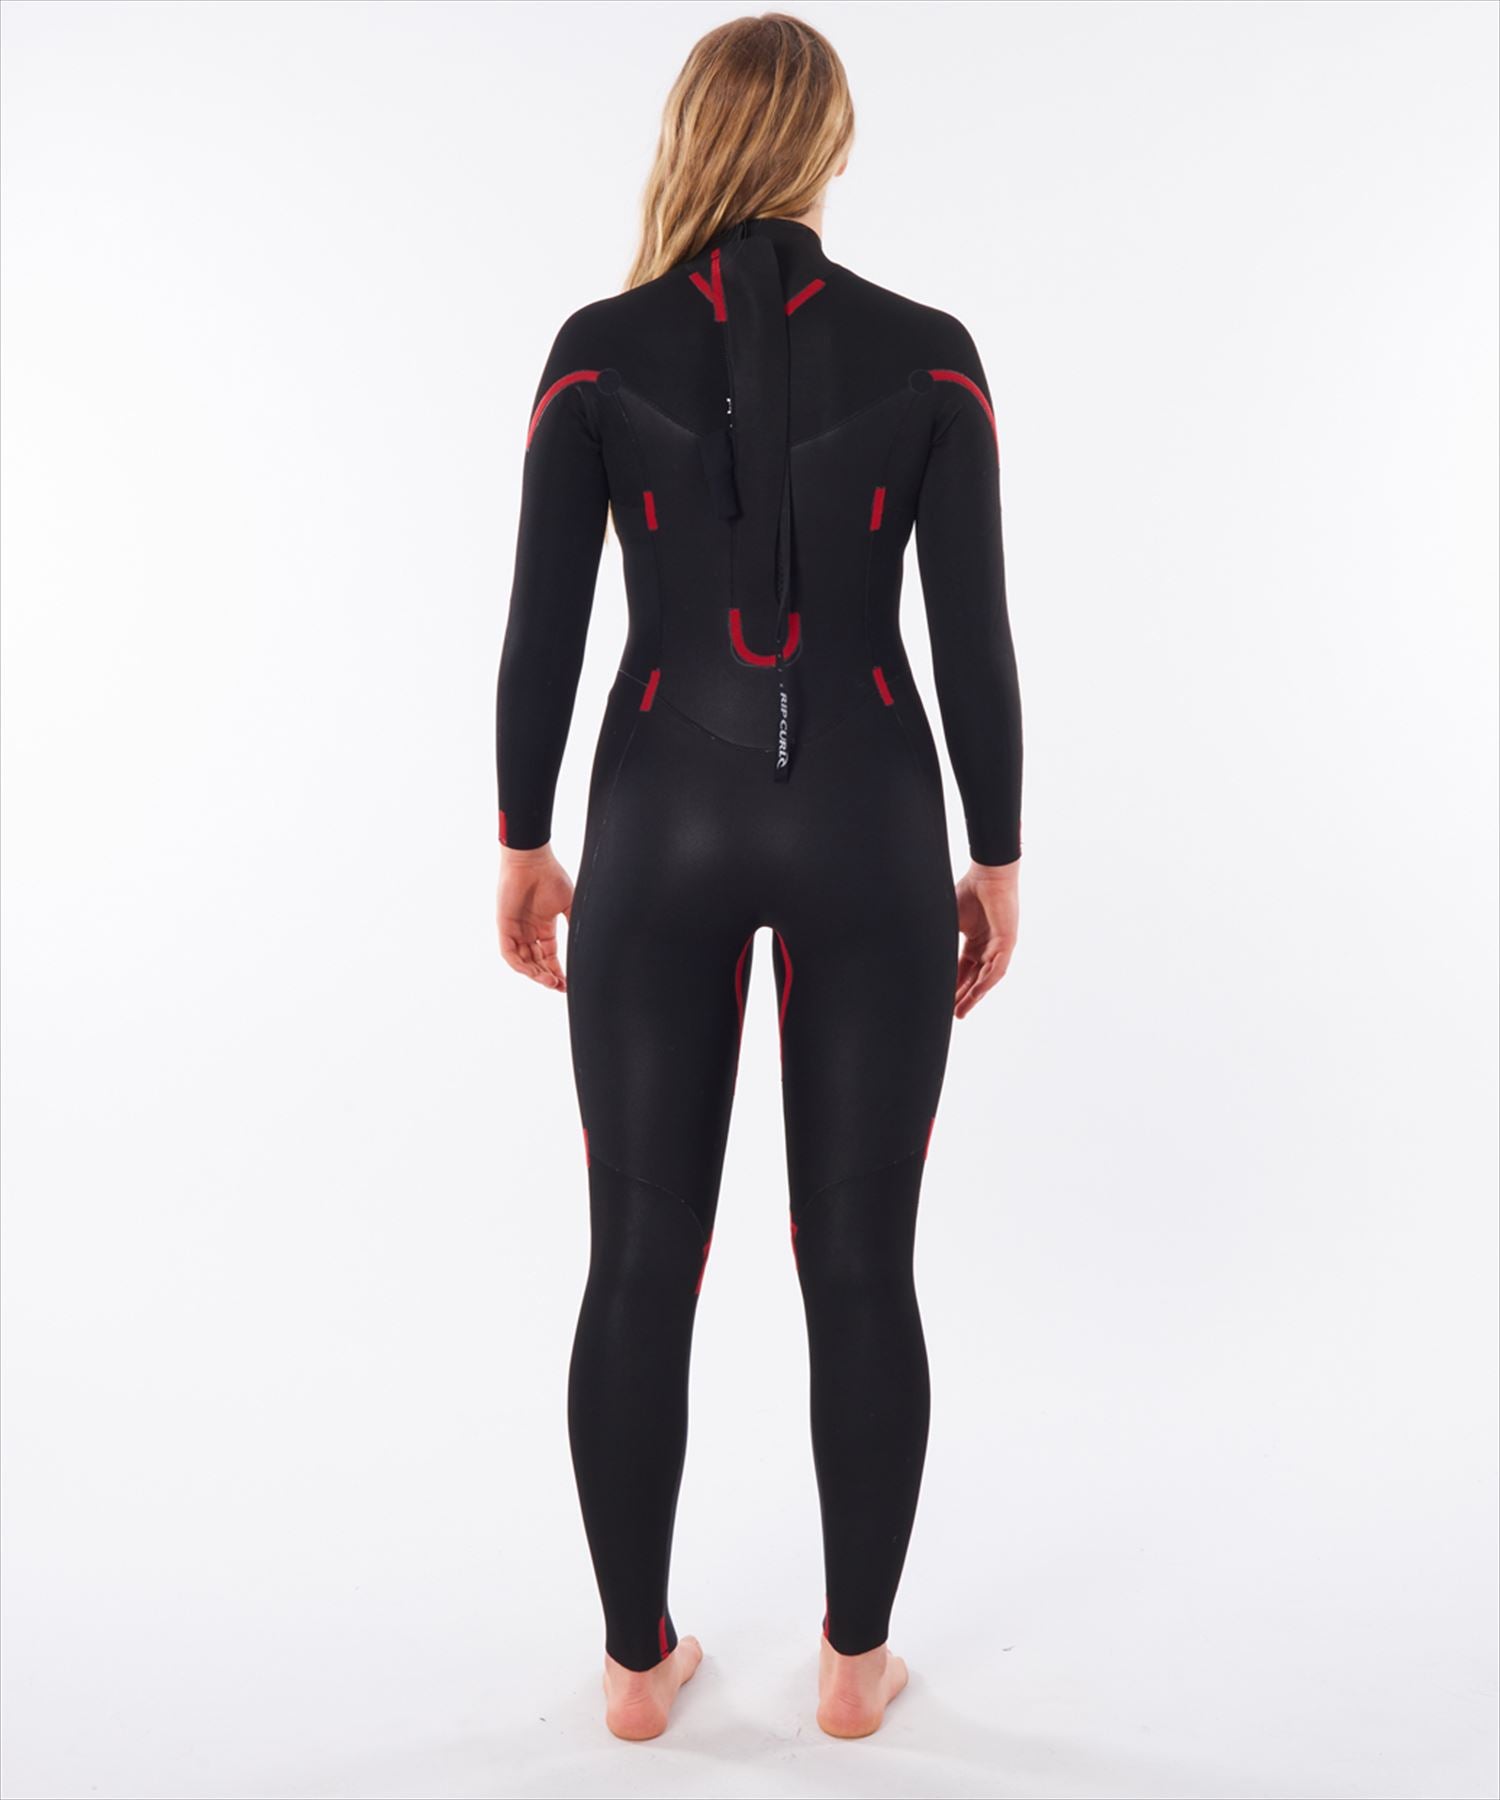 [SALE] [Spring/Autumn/Winter] Women's OMEGA 5/3mm Back Zip Wetsuit Full Suit Wetsuit